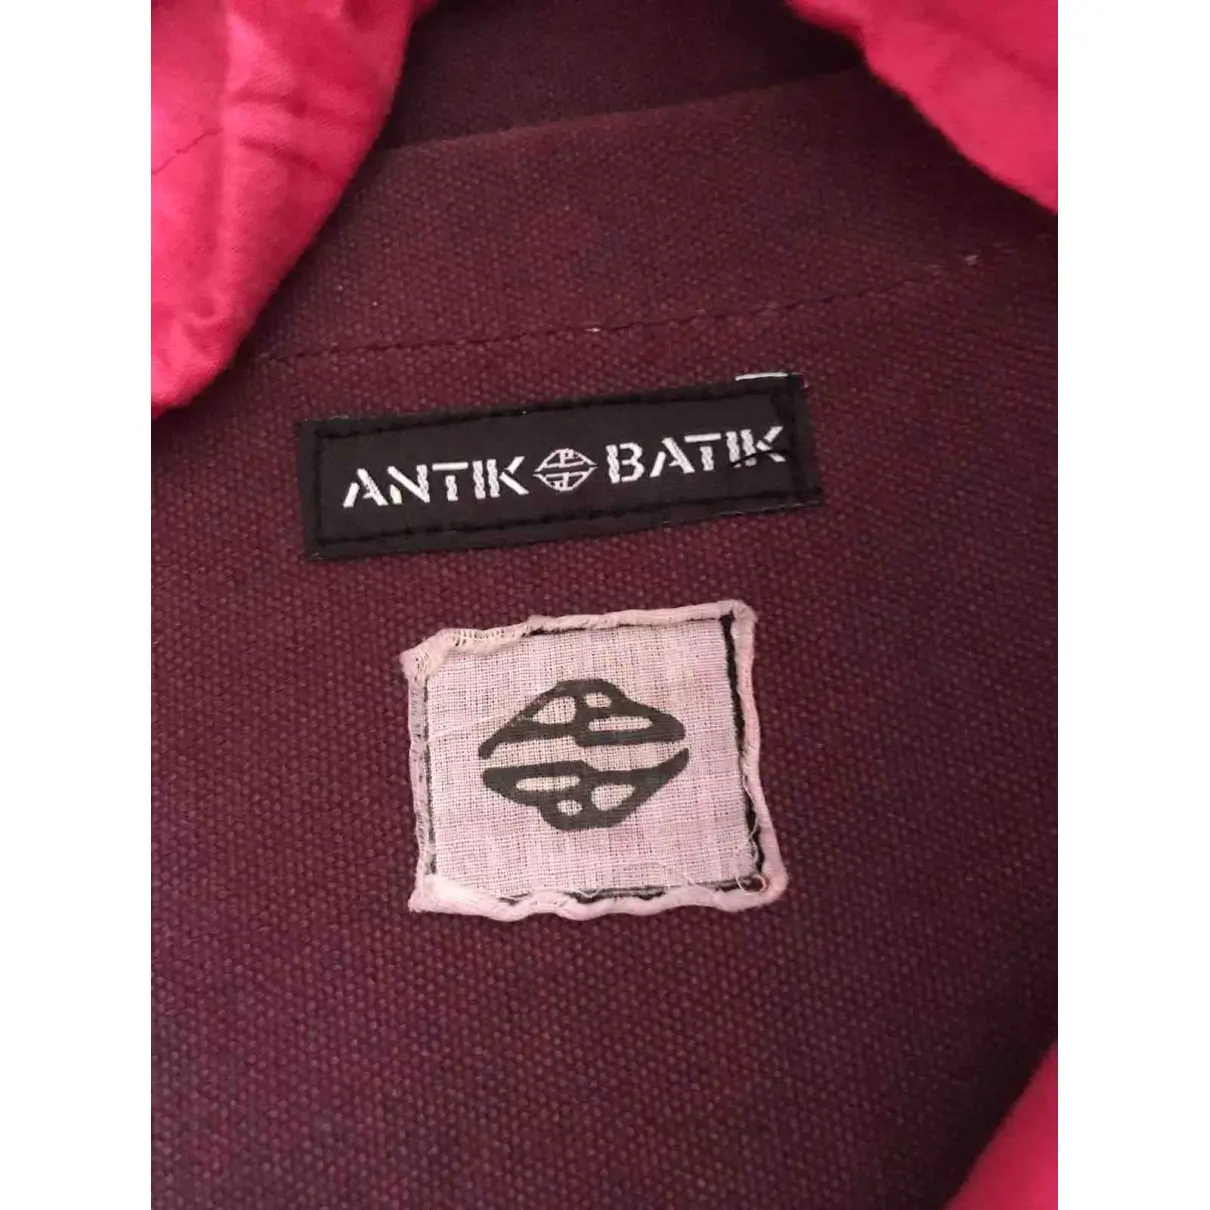 Buy Antik Batik Cloth handbag online